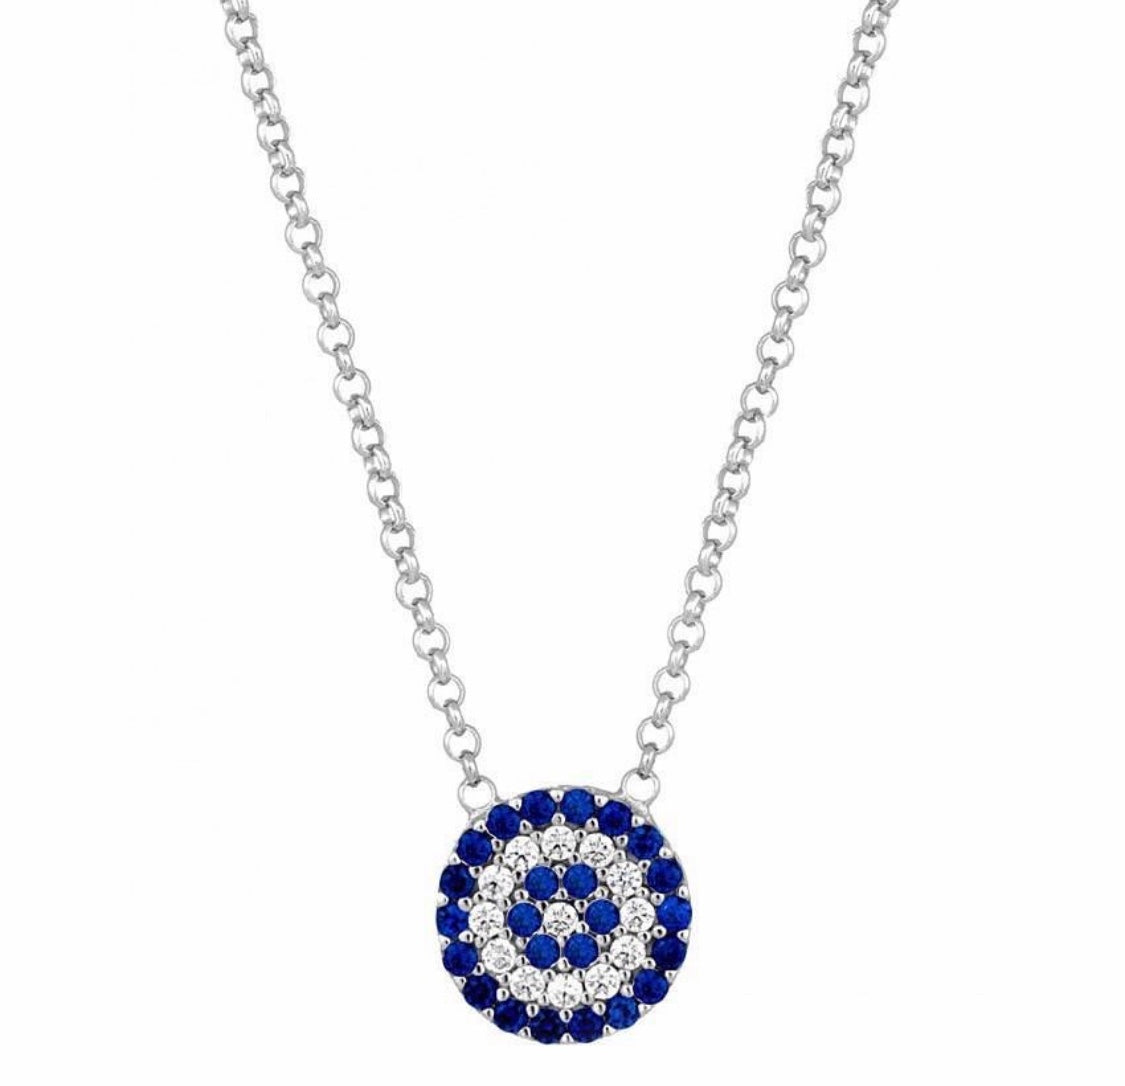 Mini blue necklace